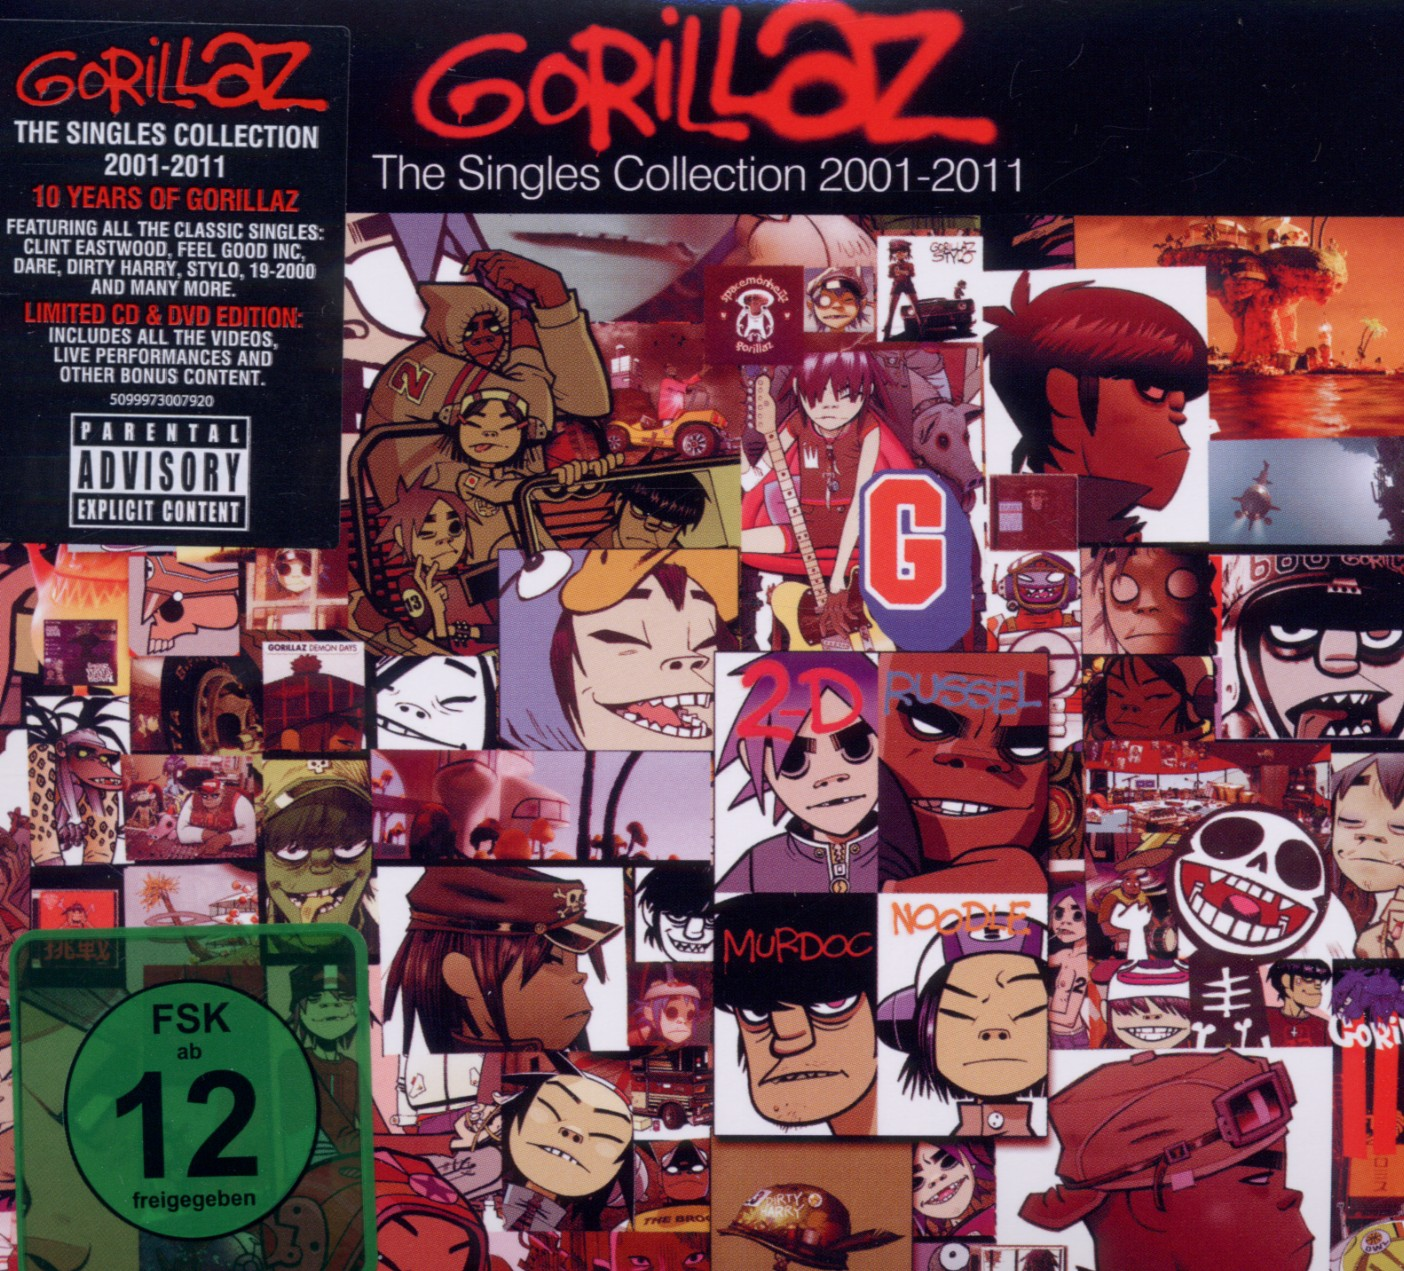 Gorillaz - The Singles Collection (CD 2001-2011 DVD Video) - 